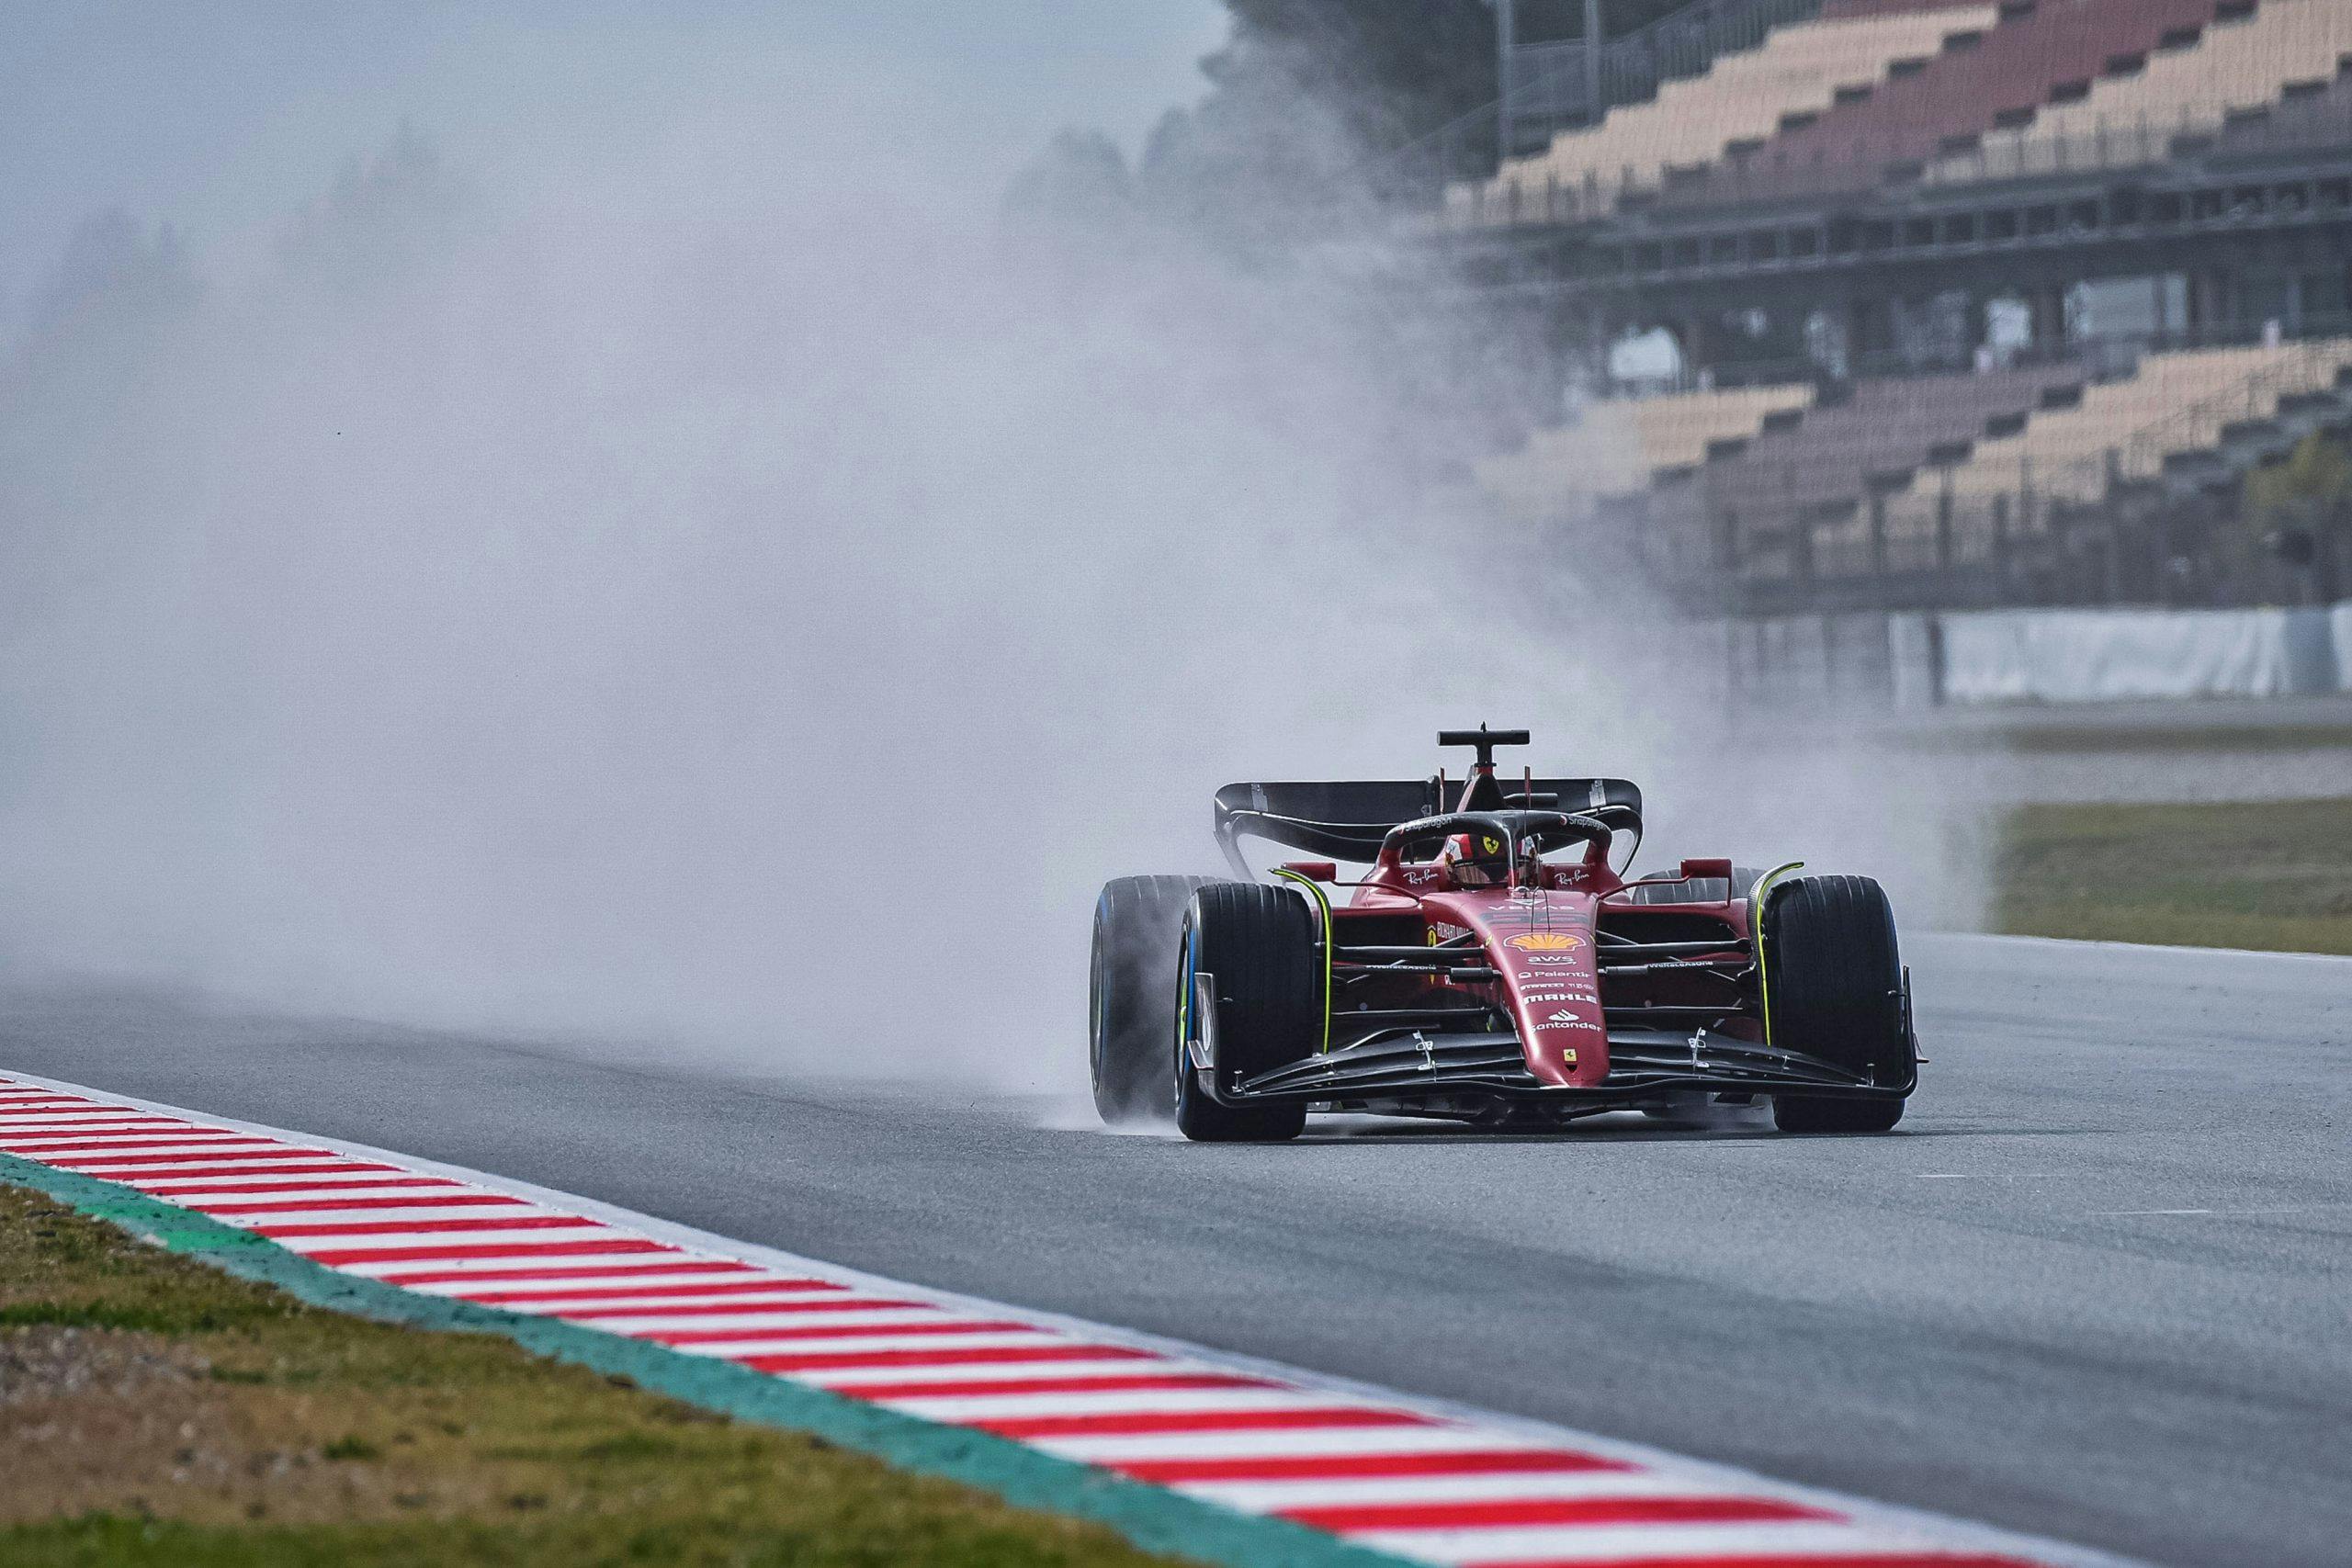 2022 Ferrari F1 car on track